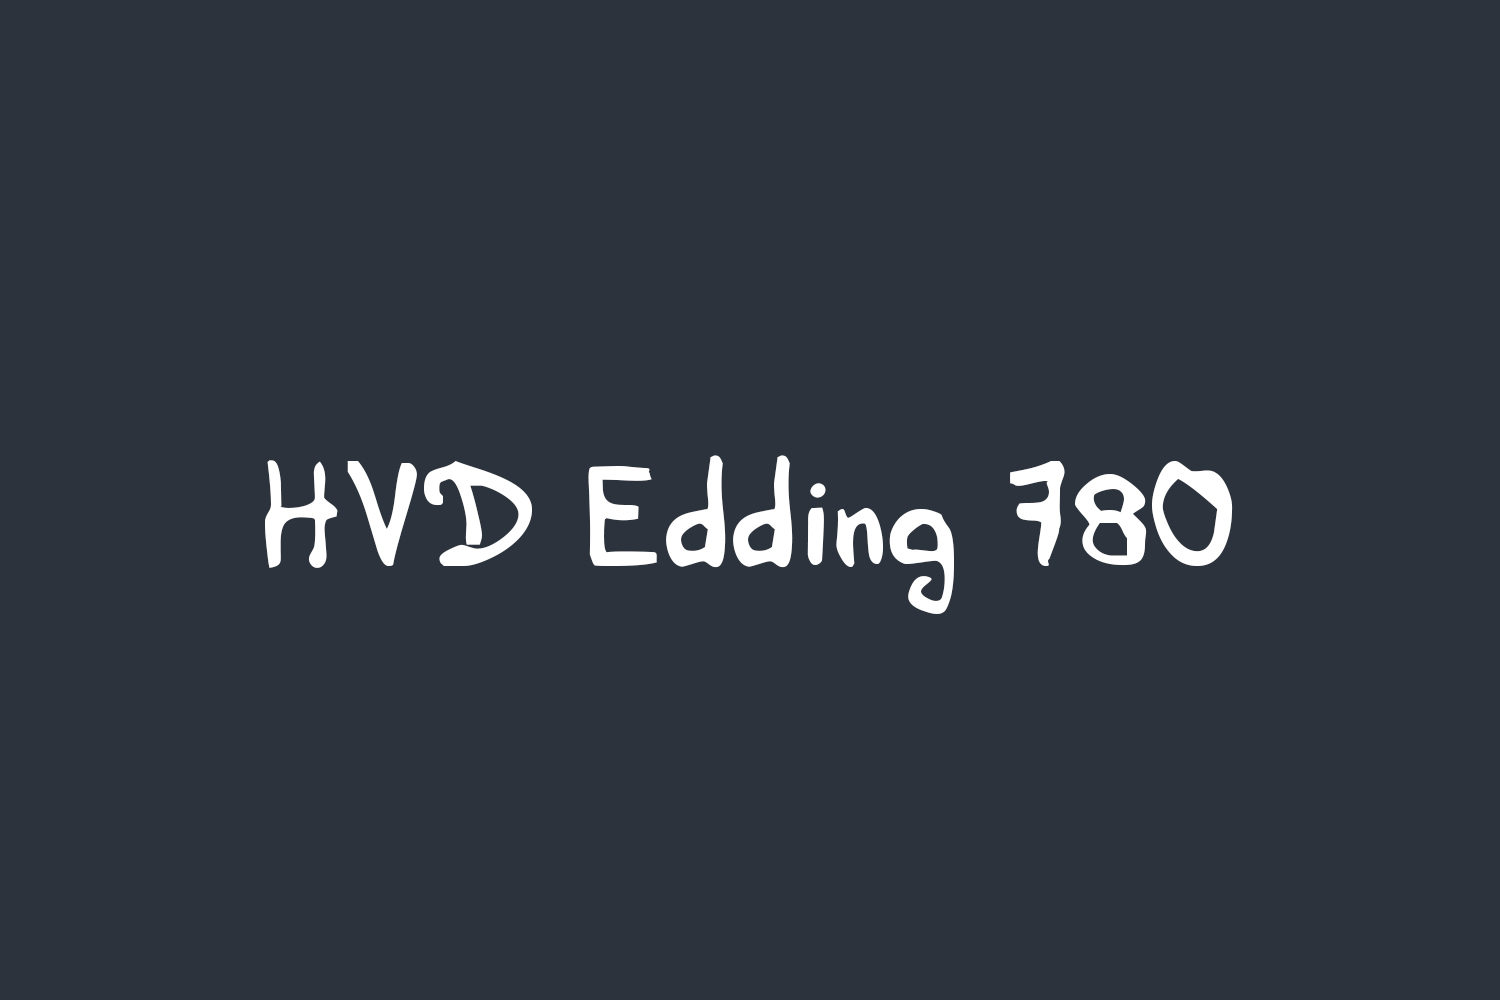 HVD Edding 780